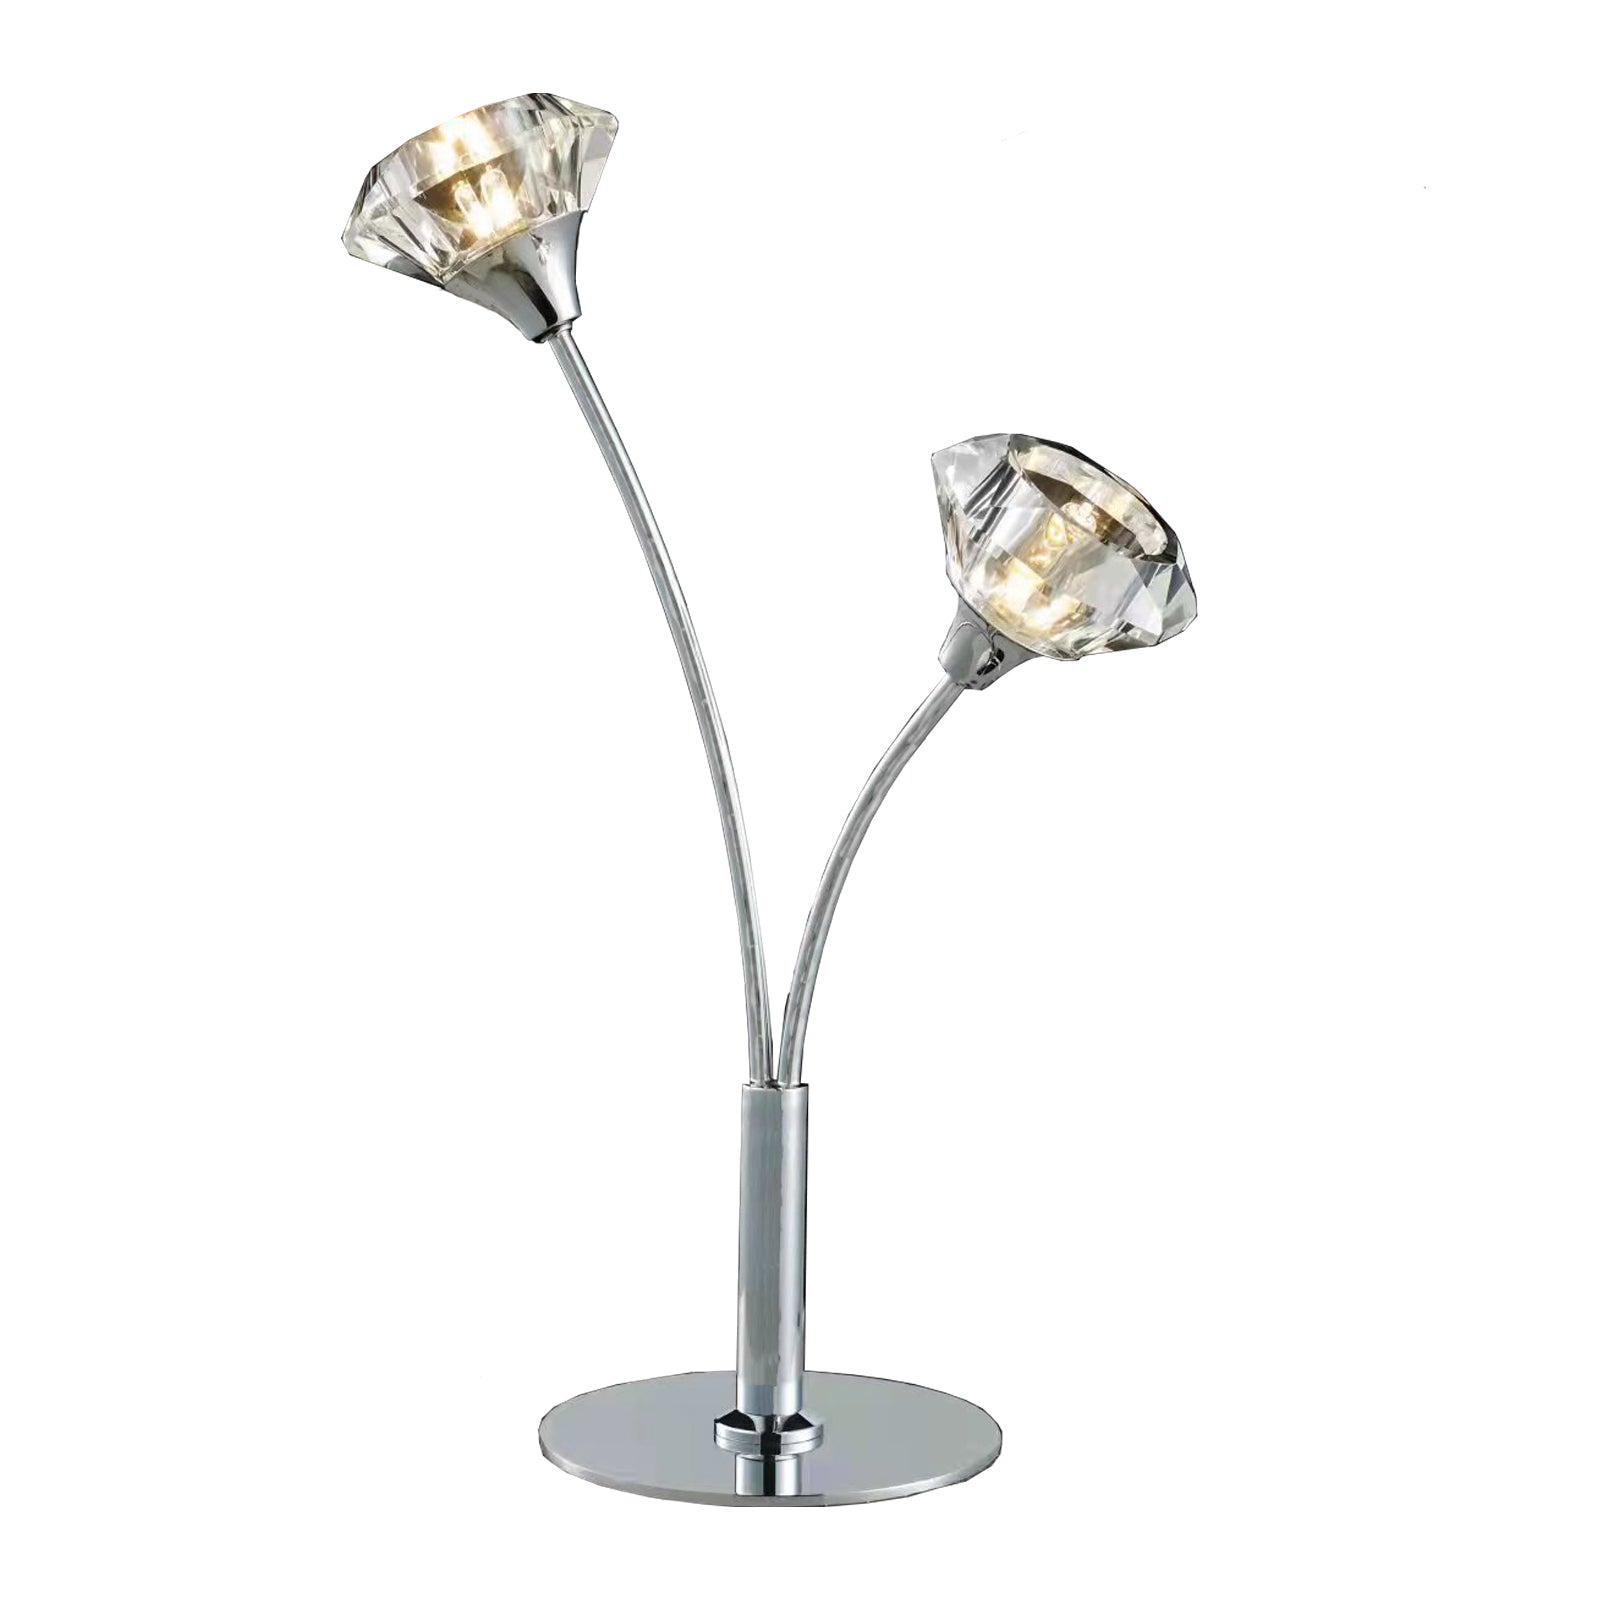 2 Light Table Lamp, UK Plug Included, Polished Chrome Finish, Clear Glass Shades